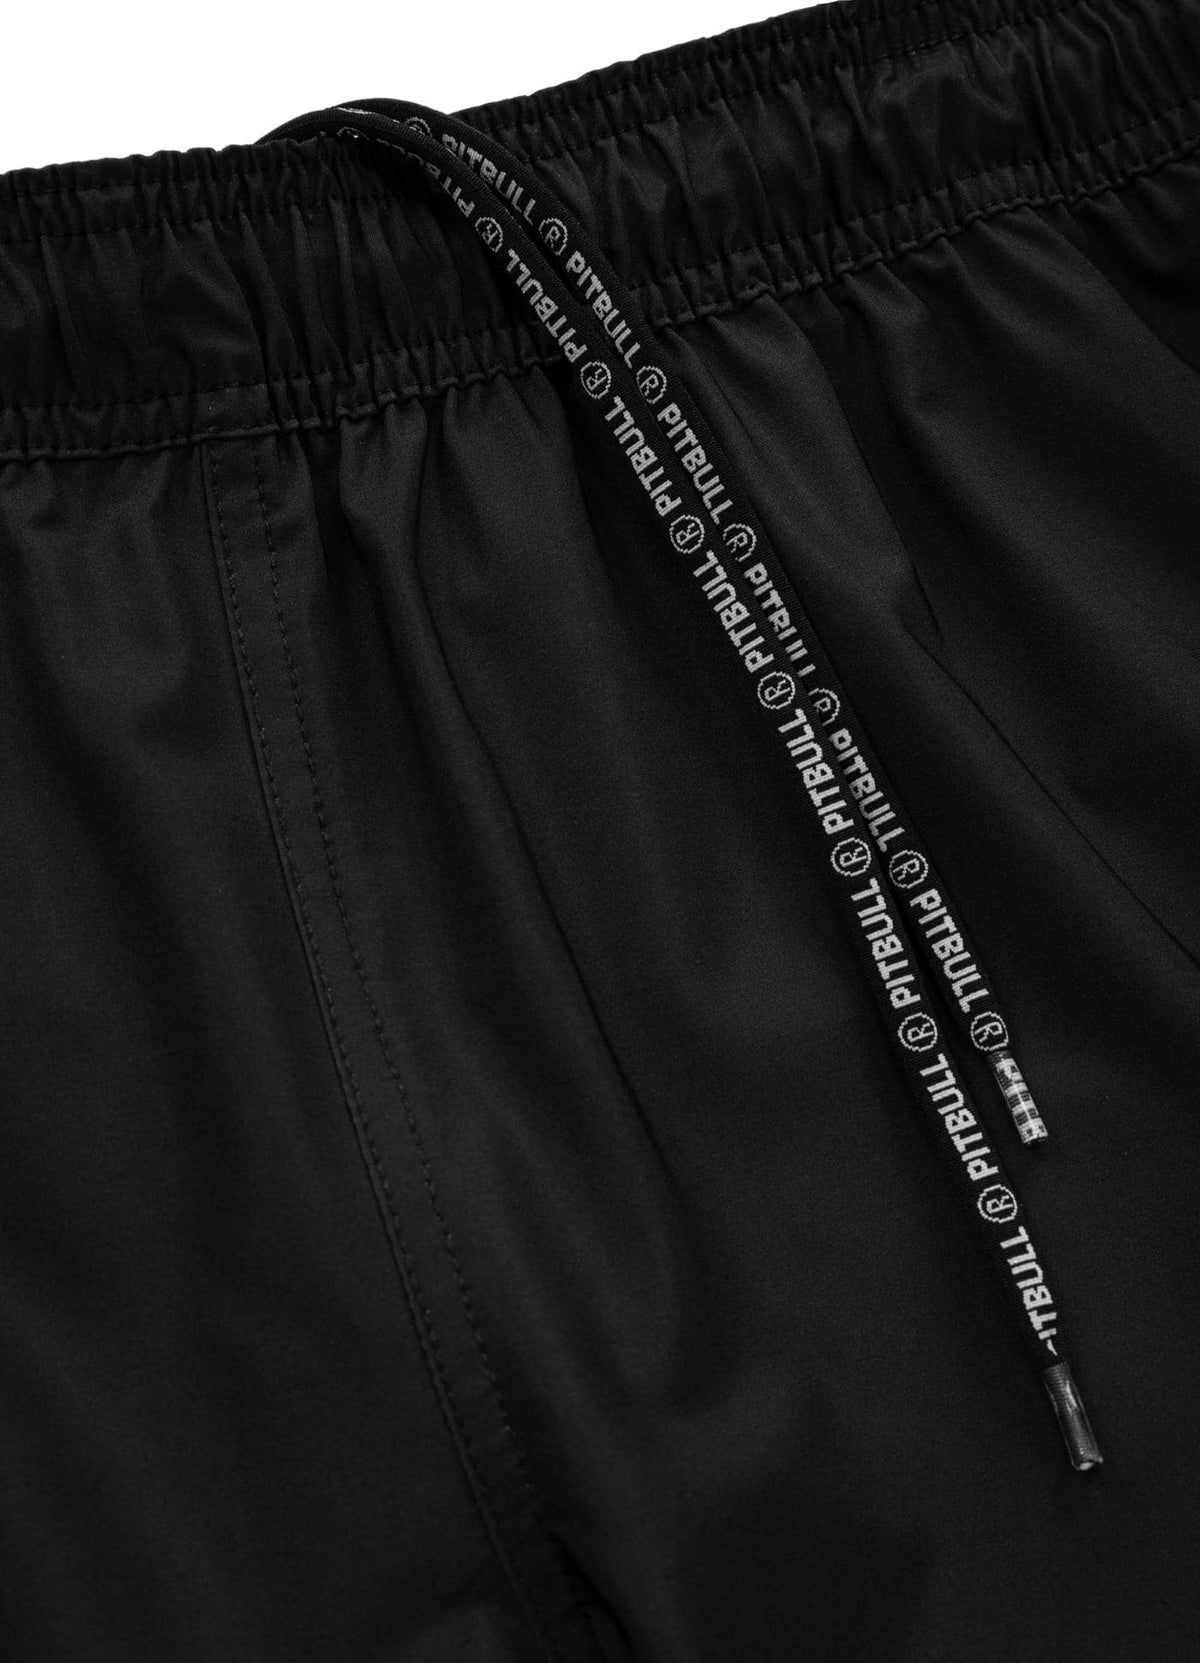 HILLTOP Black Performance Shorts - Pitbullstore.eu